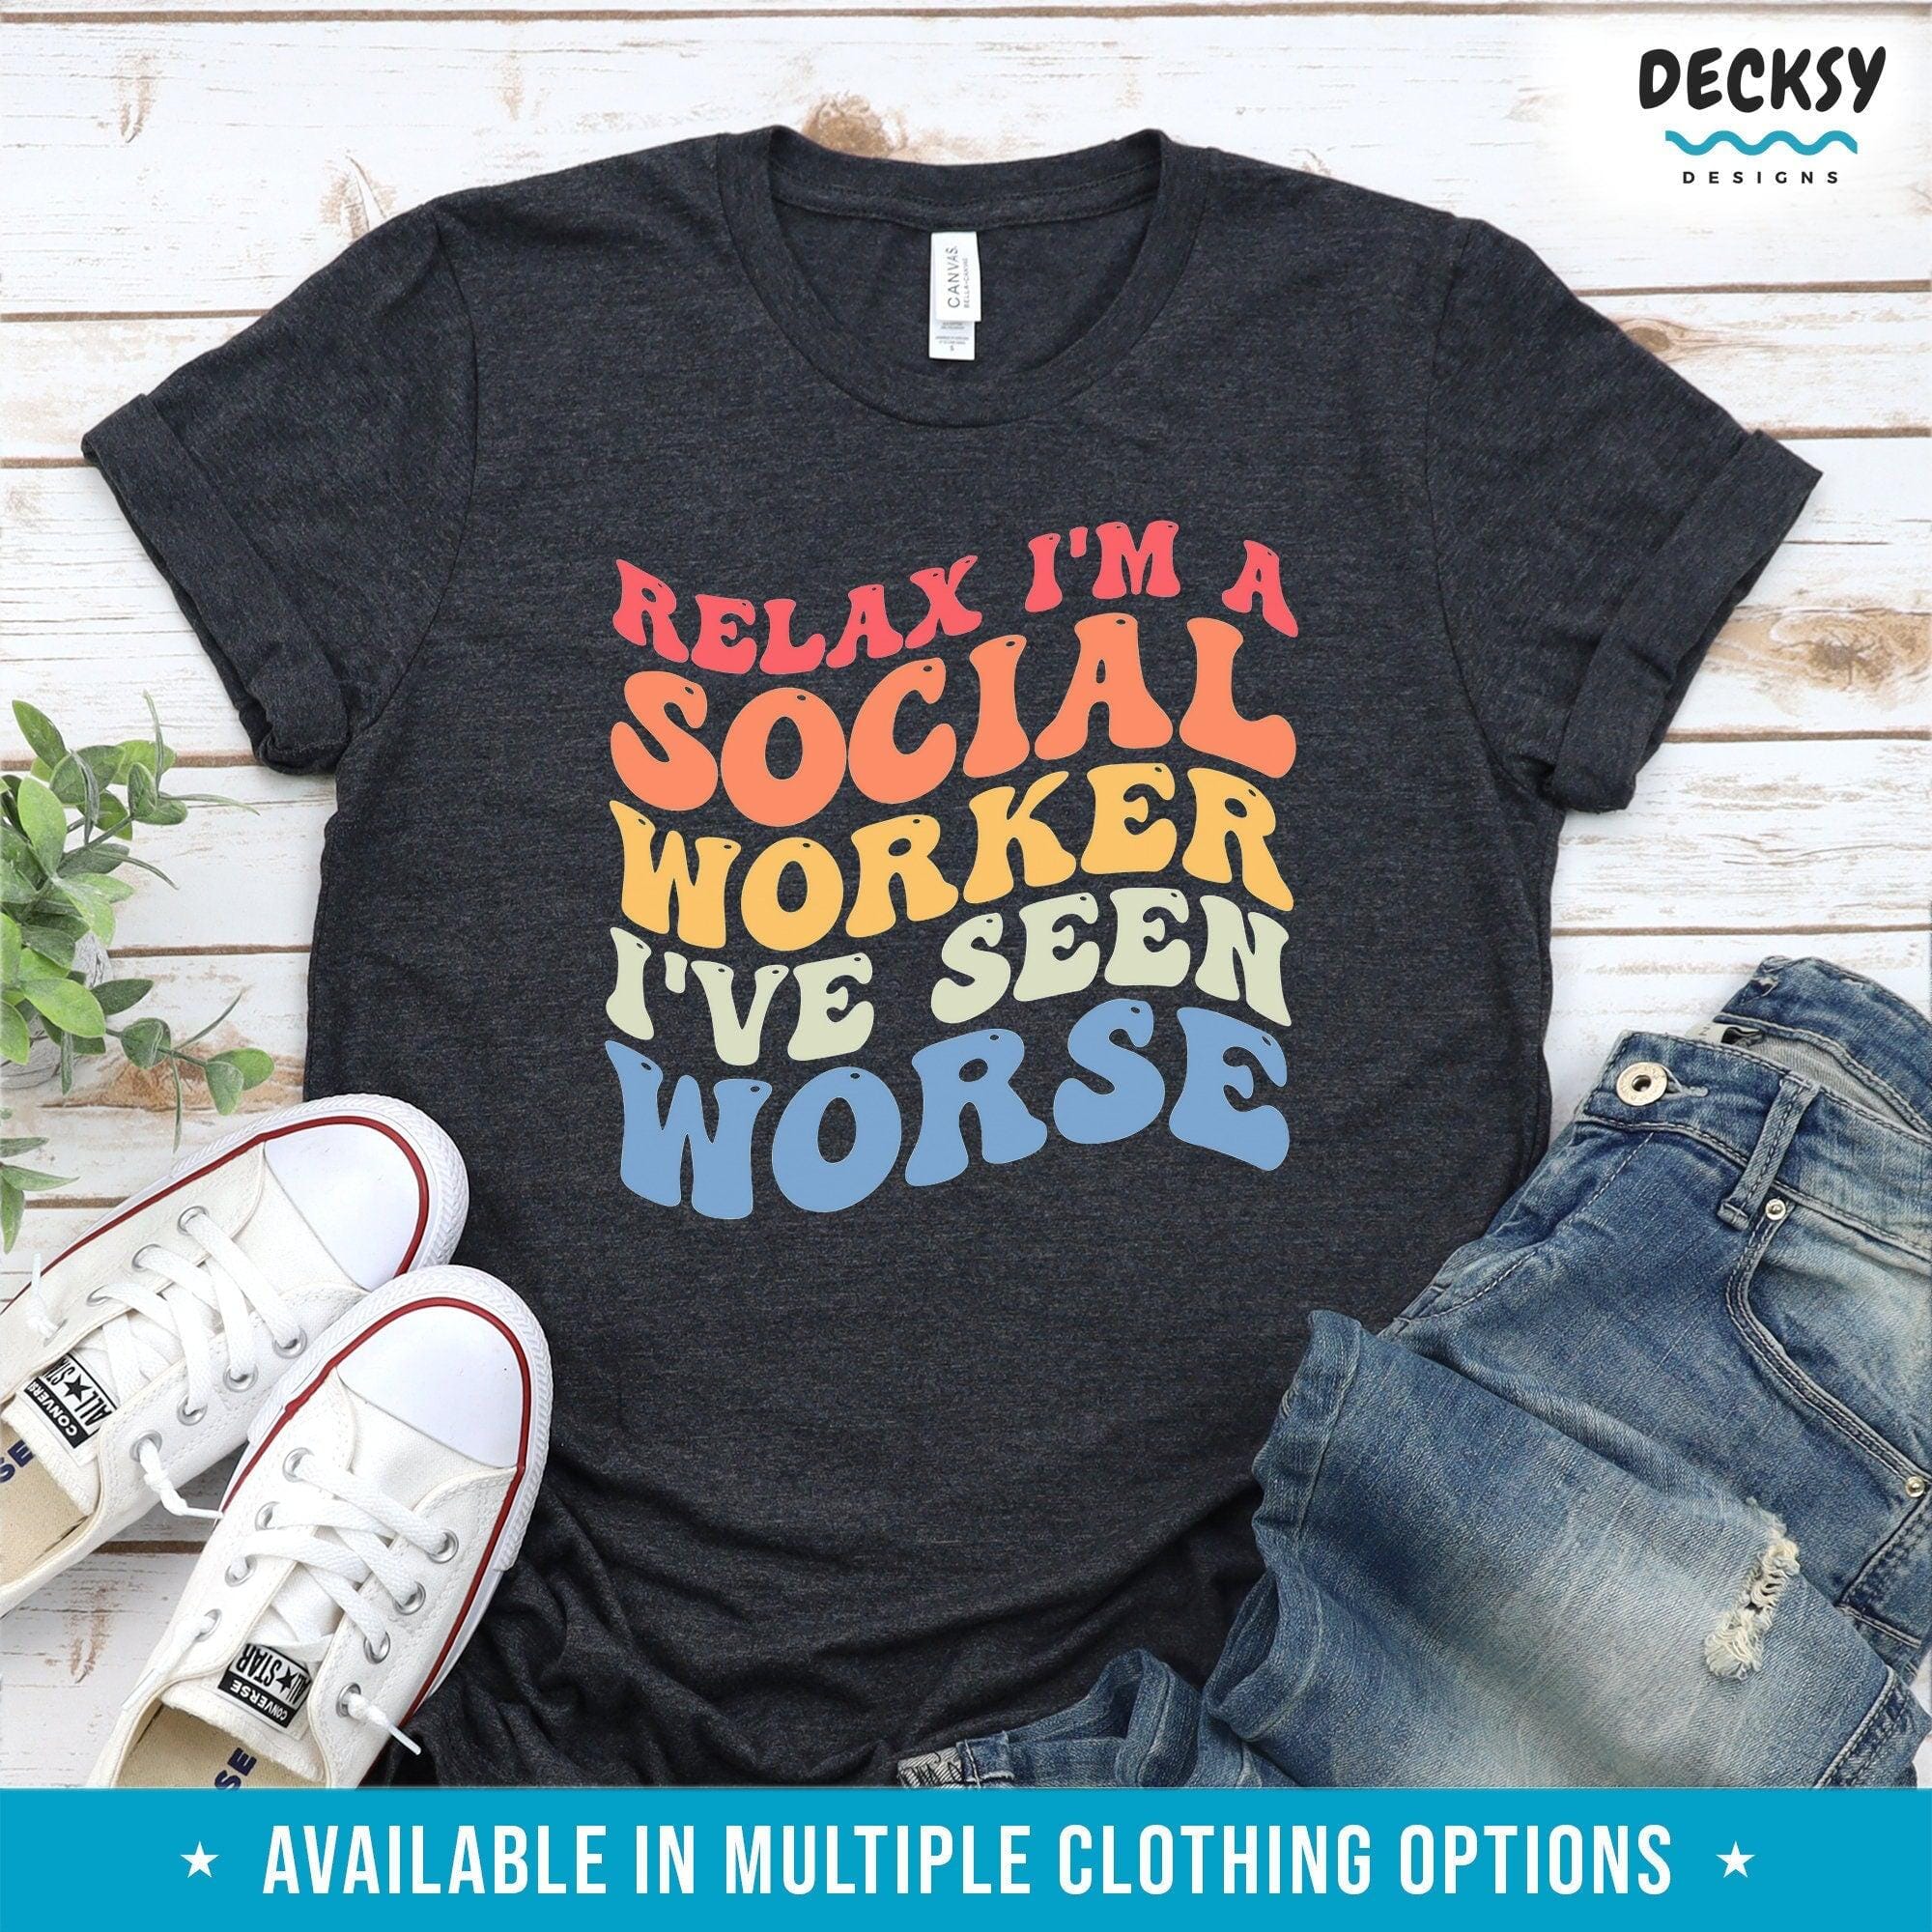 Social Worker Tshirt, School Social Work Gift-Clothing:Gender-Neutral Adult Clothing:Tops & Tees:T-shirts:Graphic Tees-DecksyDesigns